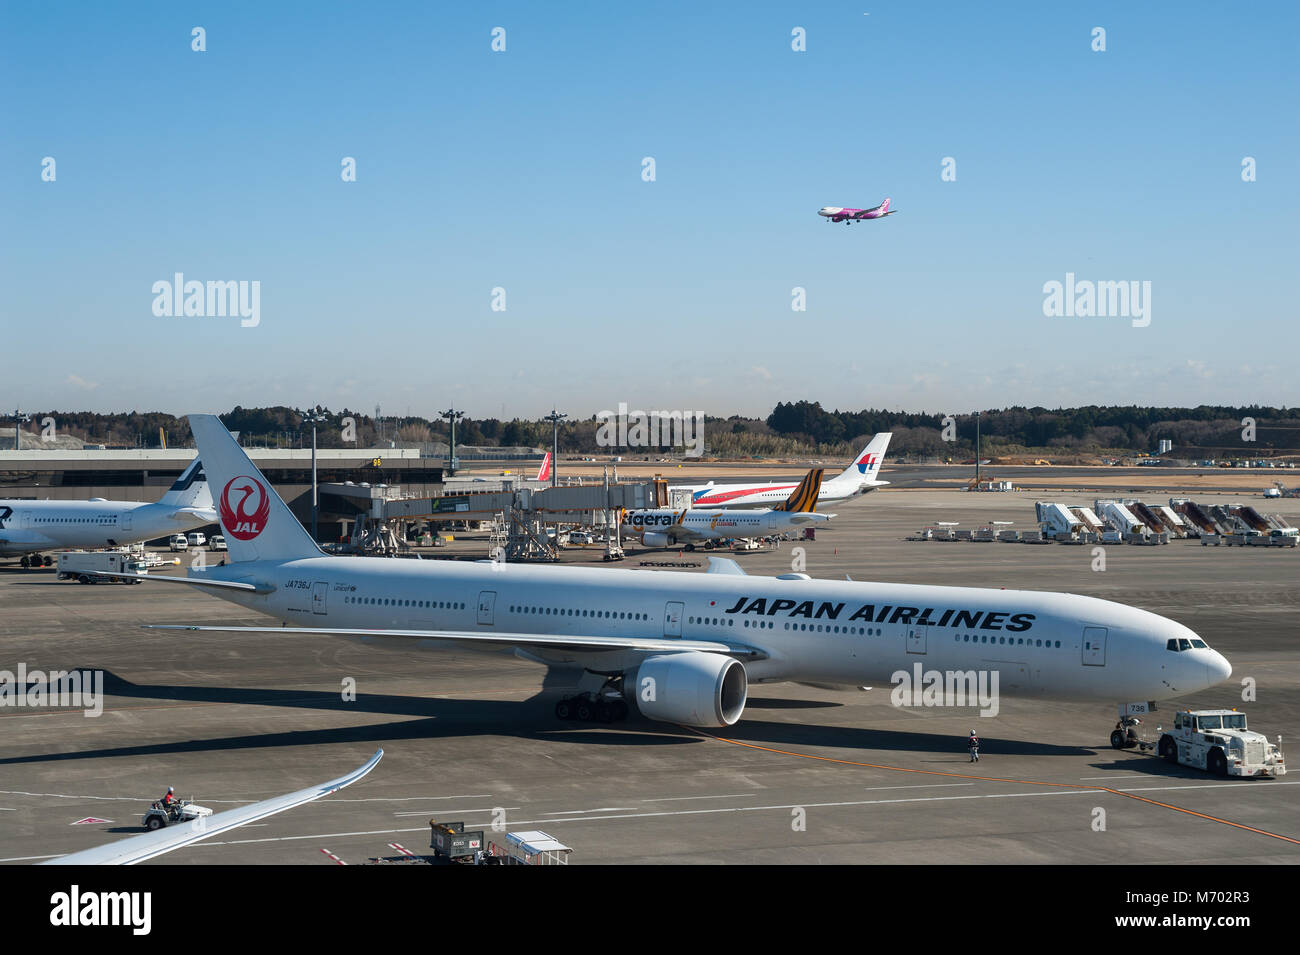 03.01.2018, Tokyo, Japan, Asia - A Japan Airlines passenger plane is seen at Tokyo's International Airport Narita. Stock Photo